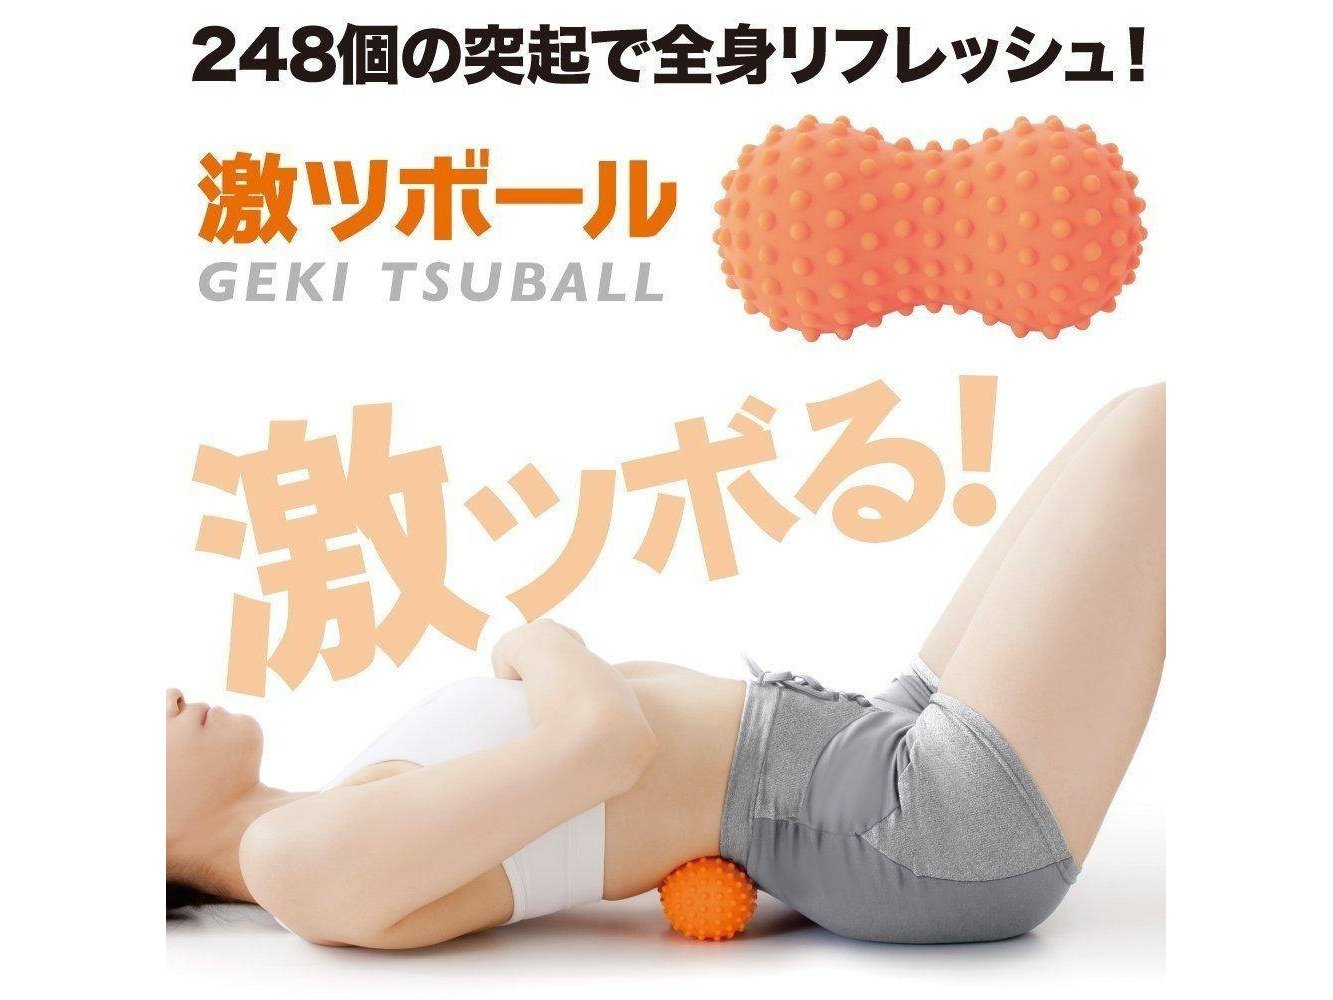 Alphax Massage Geki Tsuball